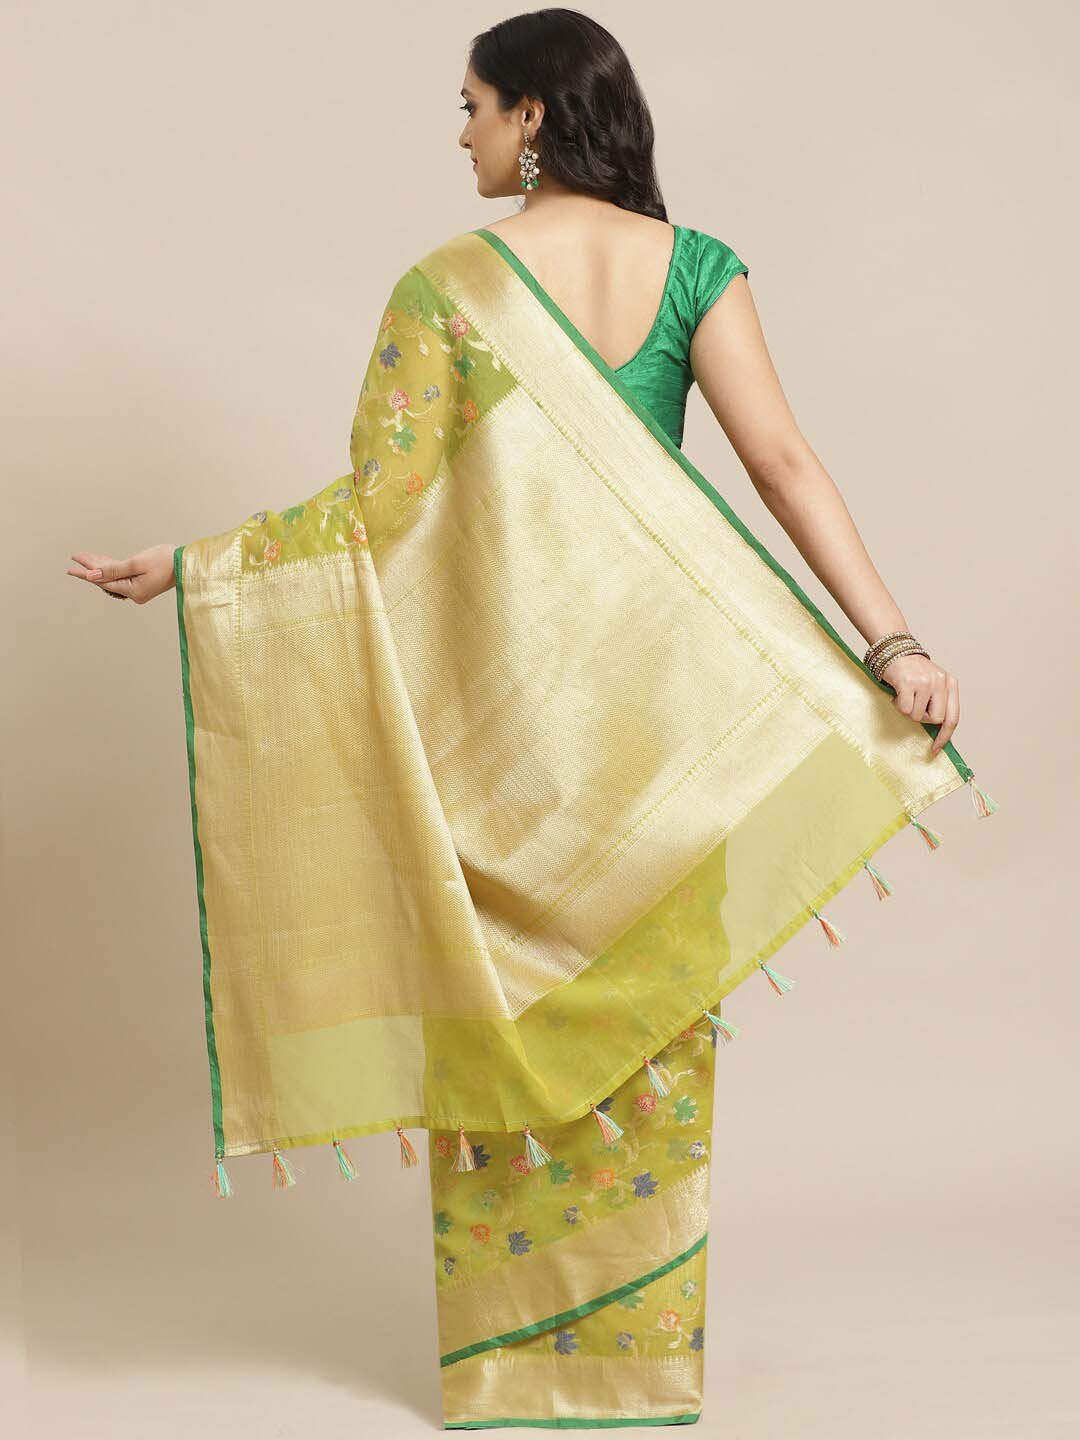 Indethnic Banarasi Green Woven Design Daily Wear Saree - View 2